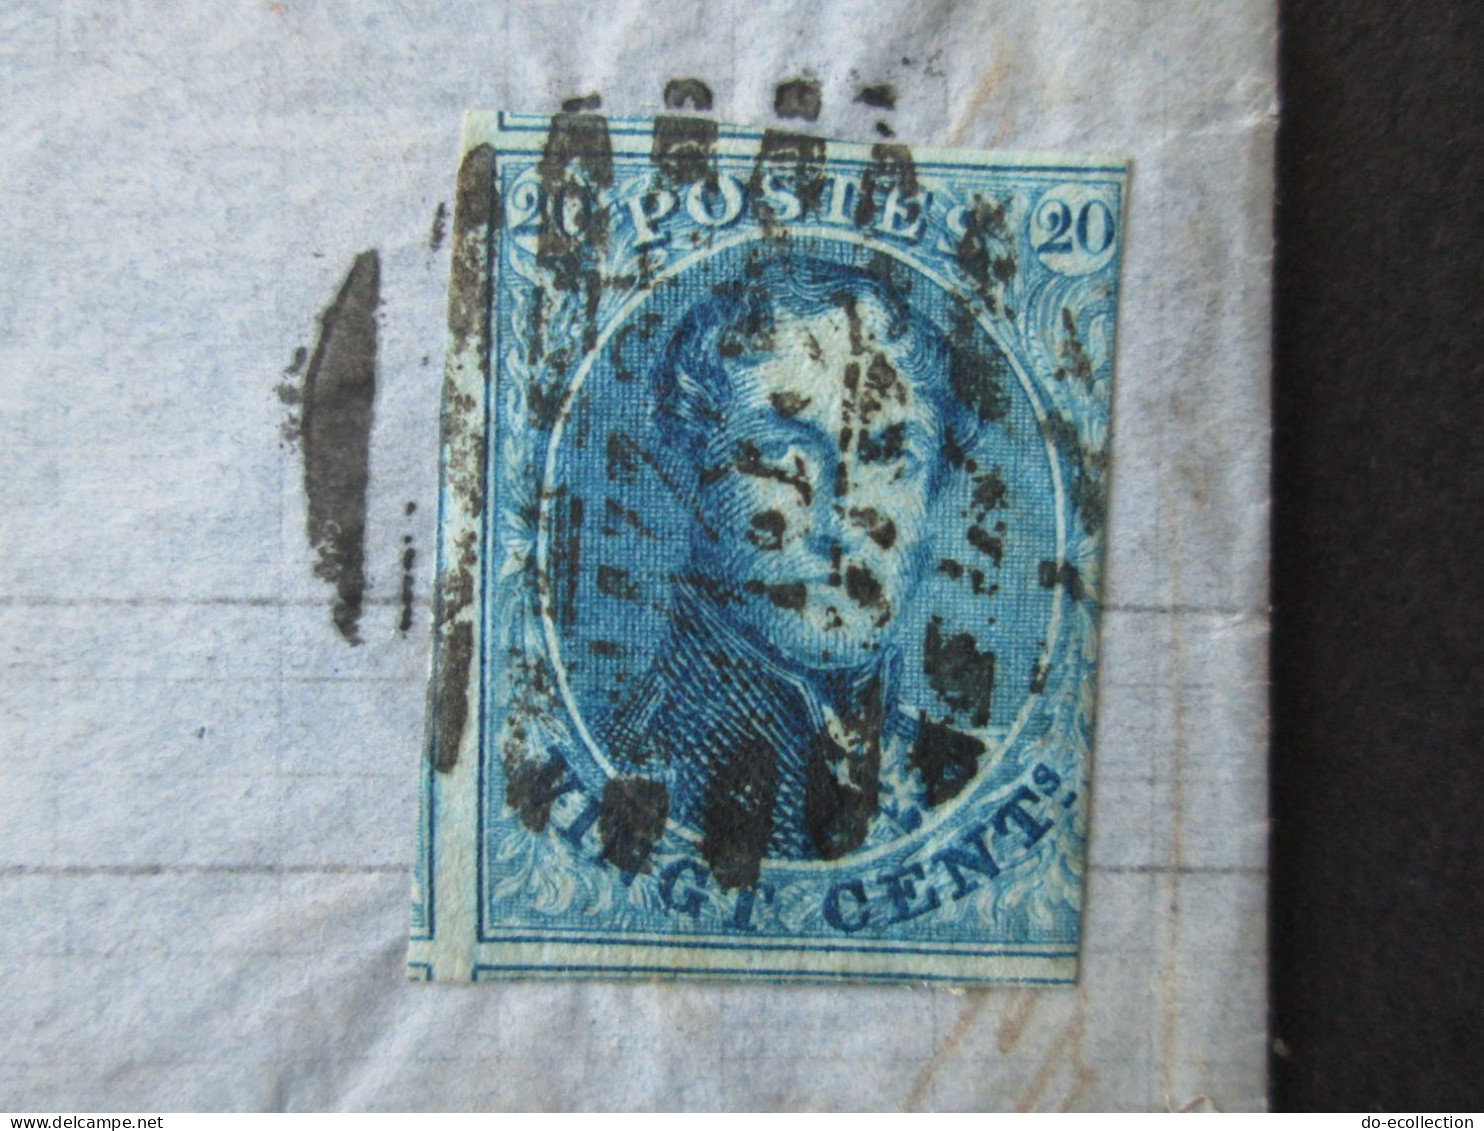 BELGIQUE 3 lettres HERVE 1855 LIEGE 1854 MARIEMBOURG 1863 timbres Leopold I 10c 20c Belgie Belgium timbre stamps